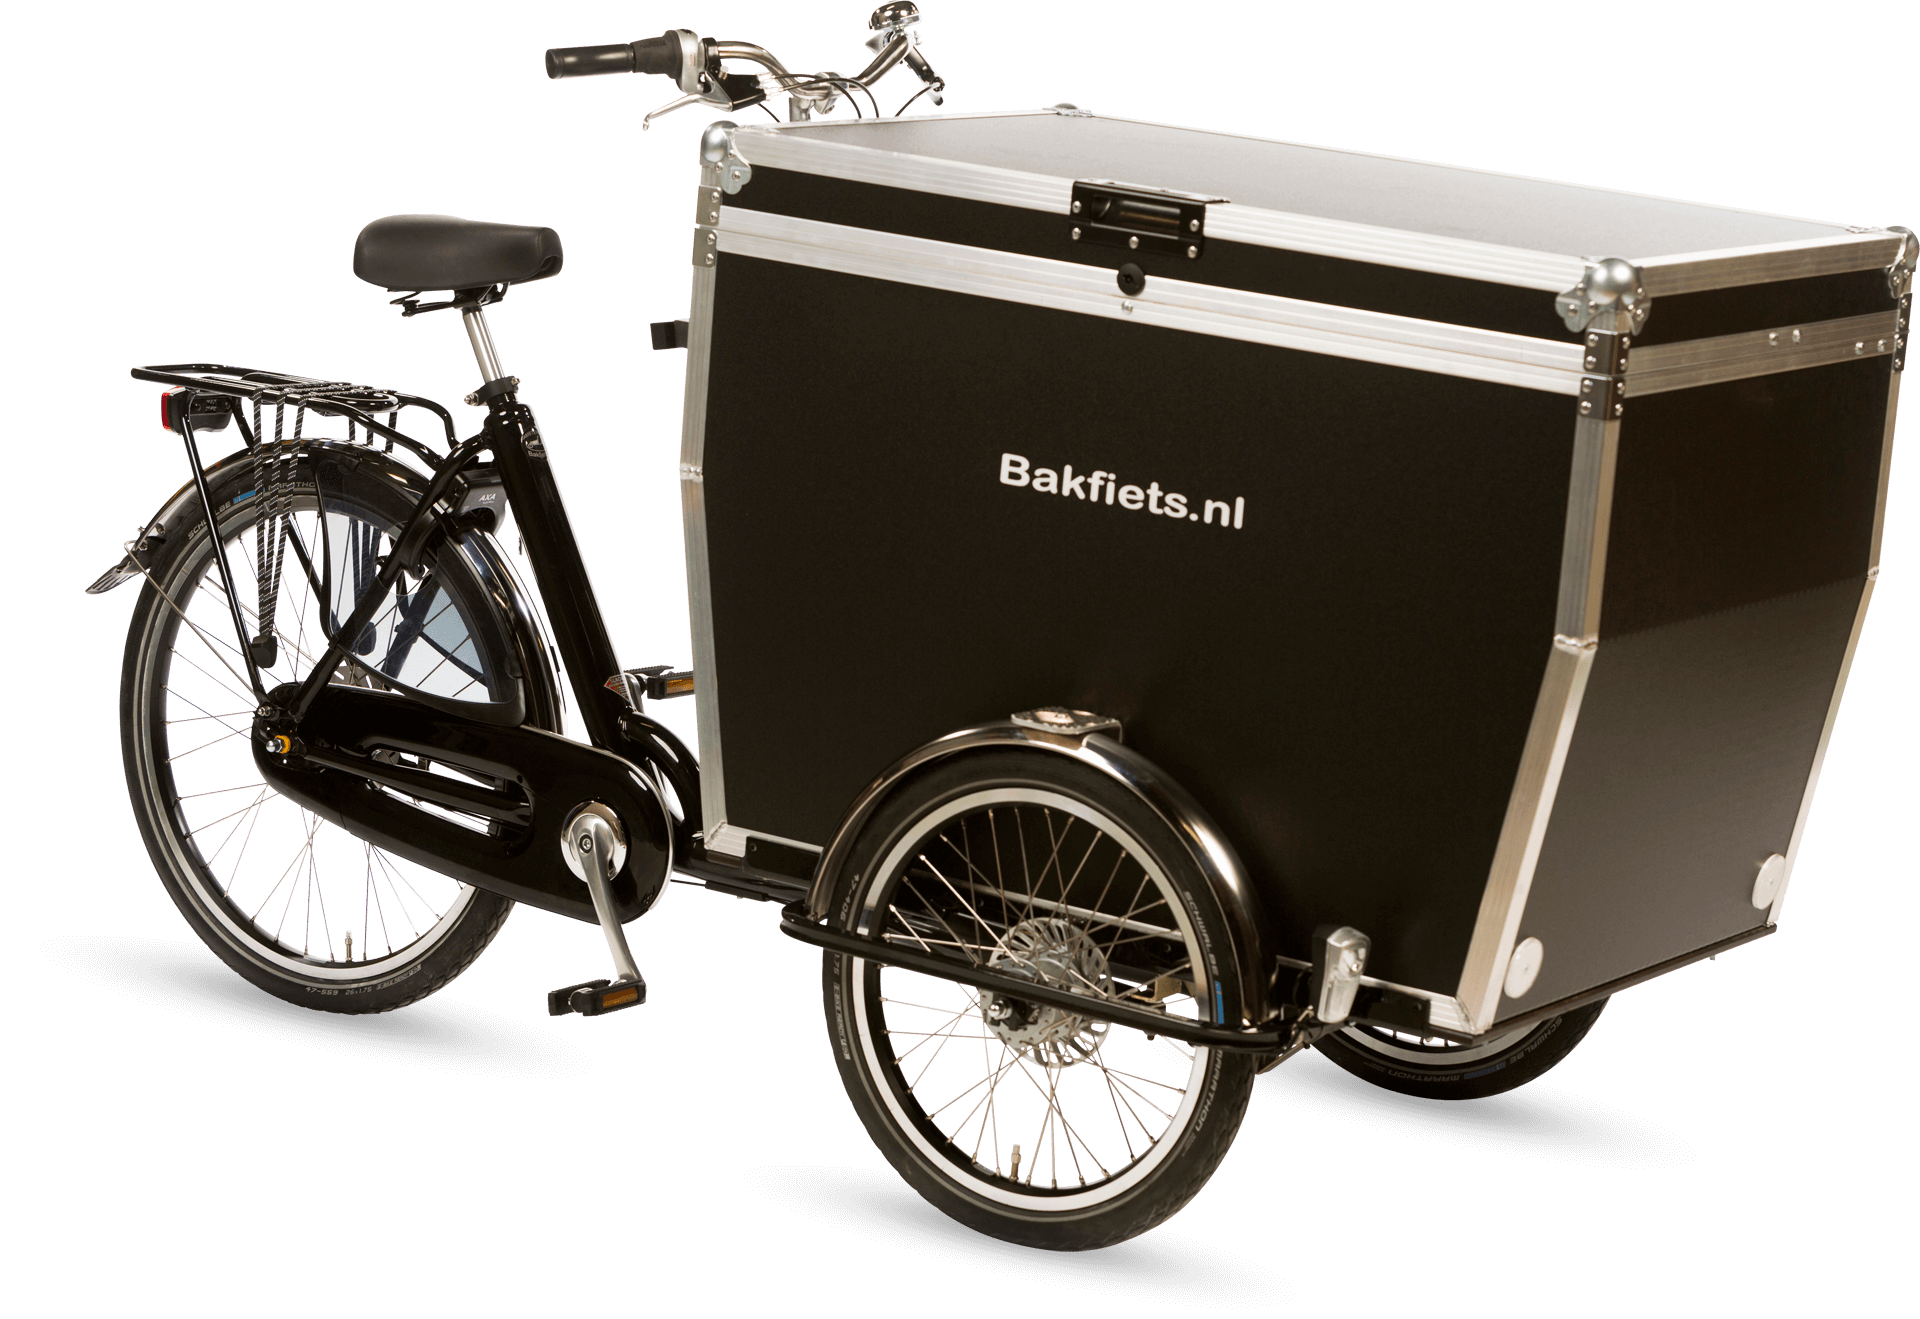 beruf-bakfiets-azor-bike-2018-034 rad3 – Produkte – Beruf – Bakfiets Trike Breit